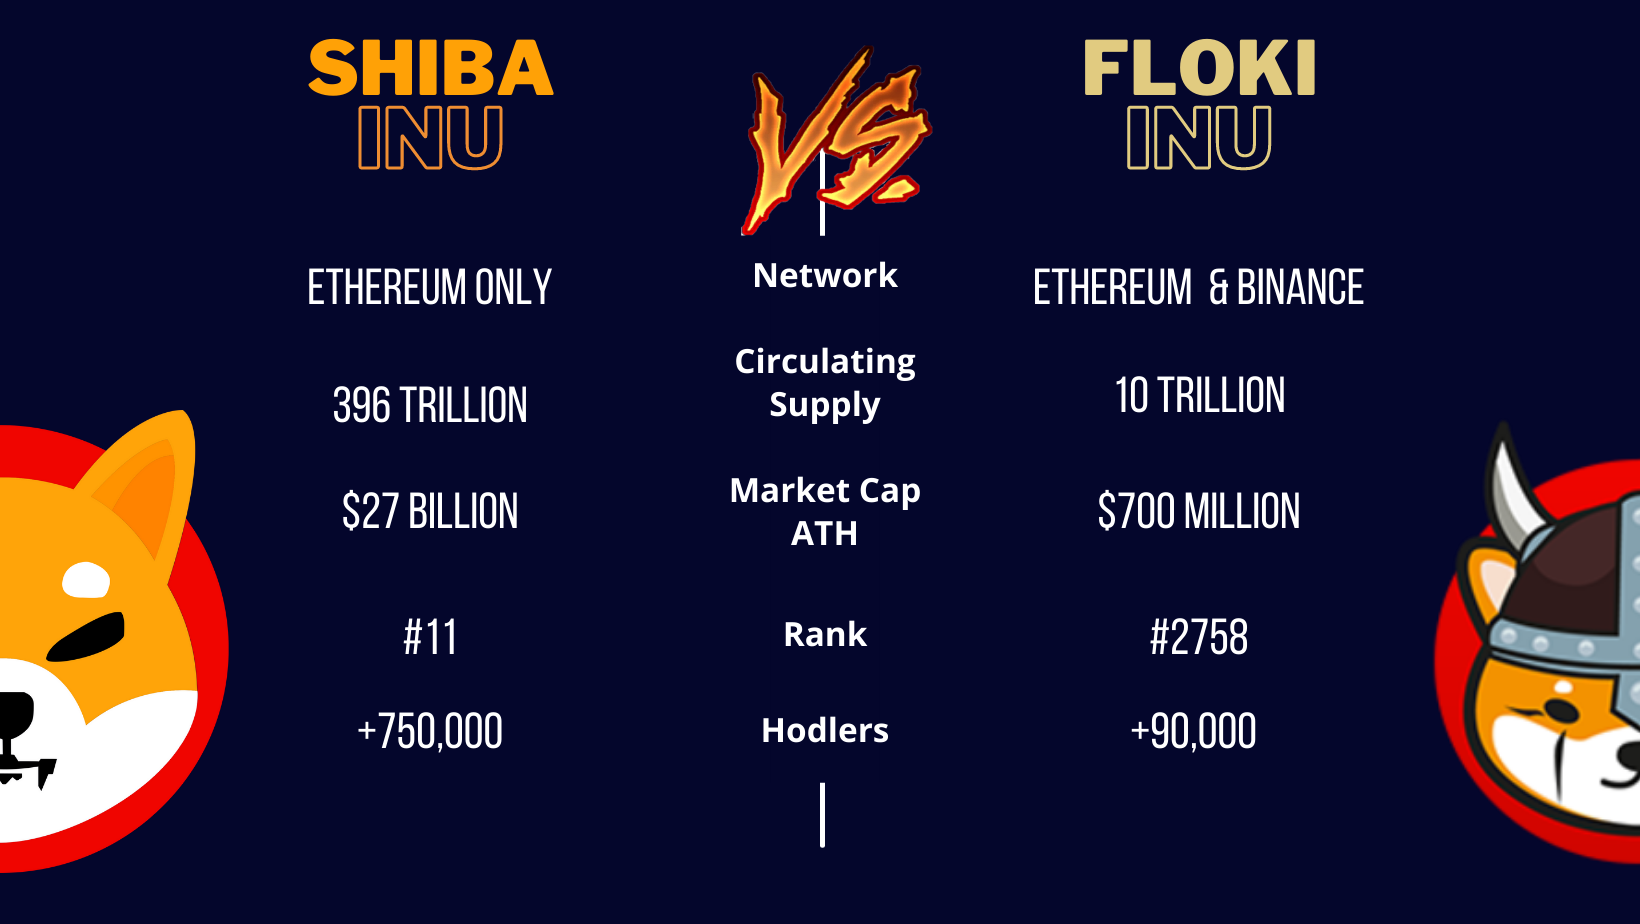 Floki Inu vs. Shiba Inu - Differences and Similarities